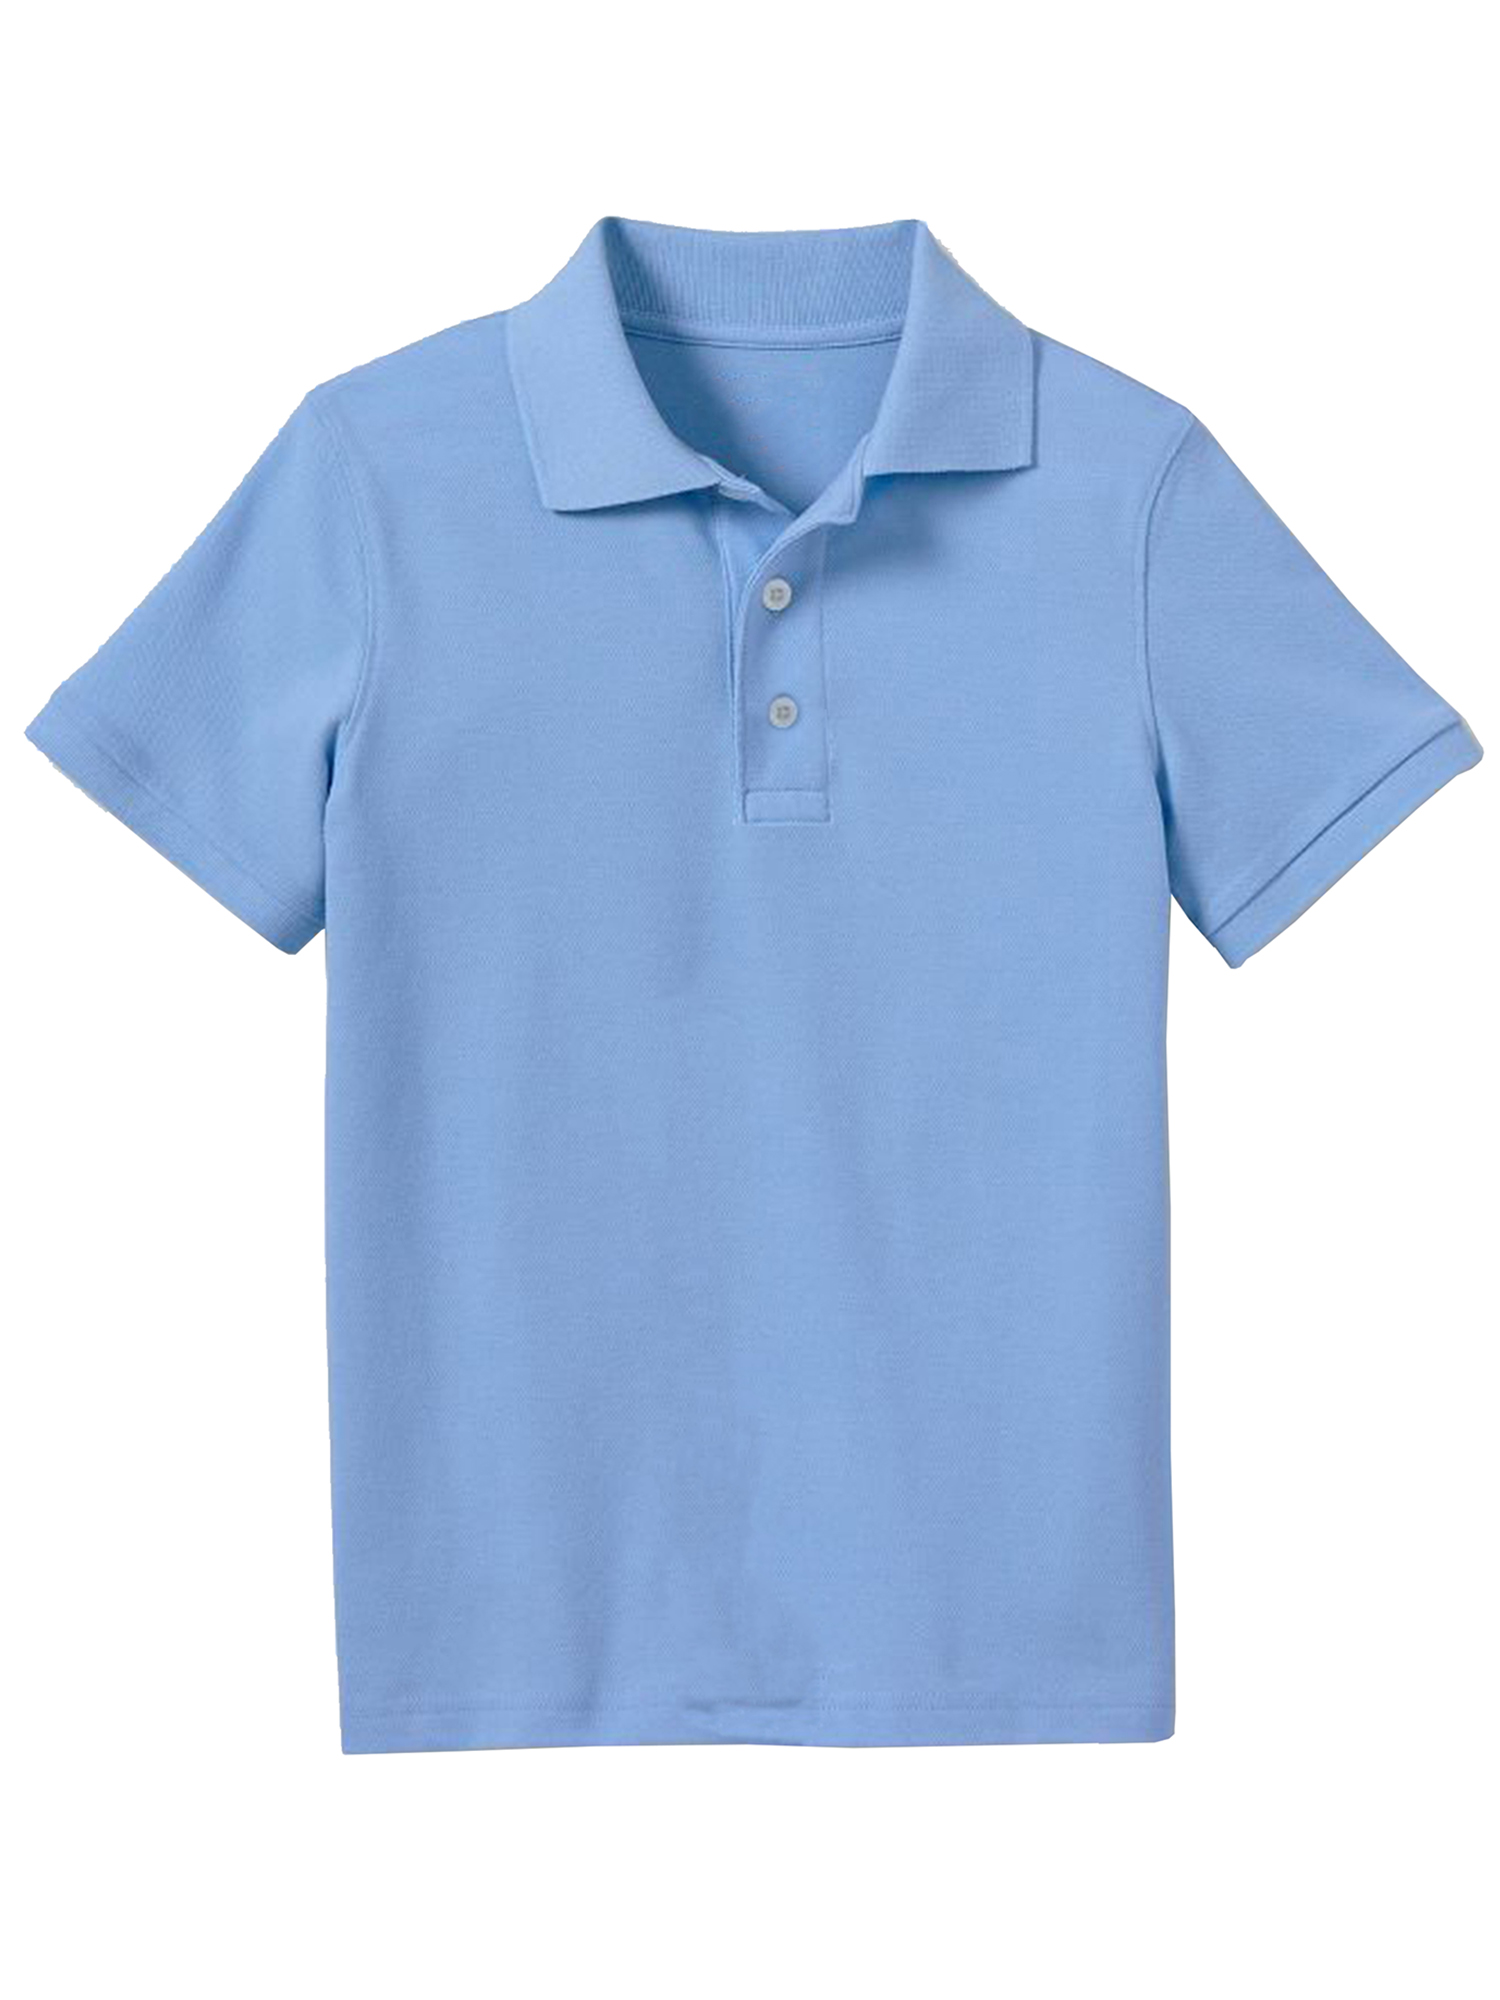 GBH Boys School Uniform Short Sleeve Pique Polo Shirt (Little Boys ...